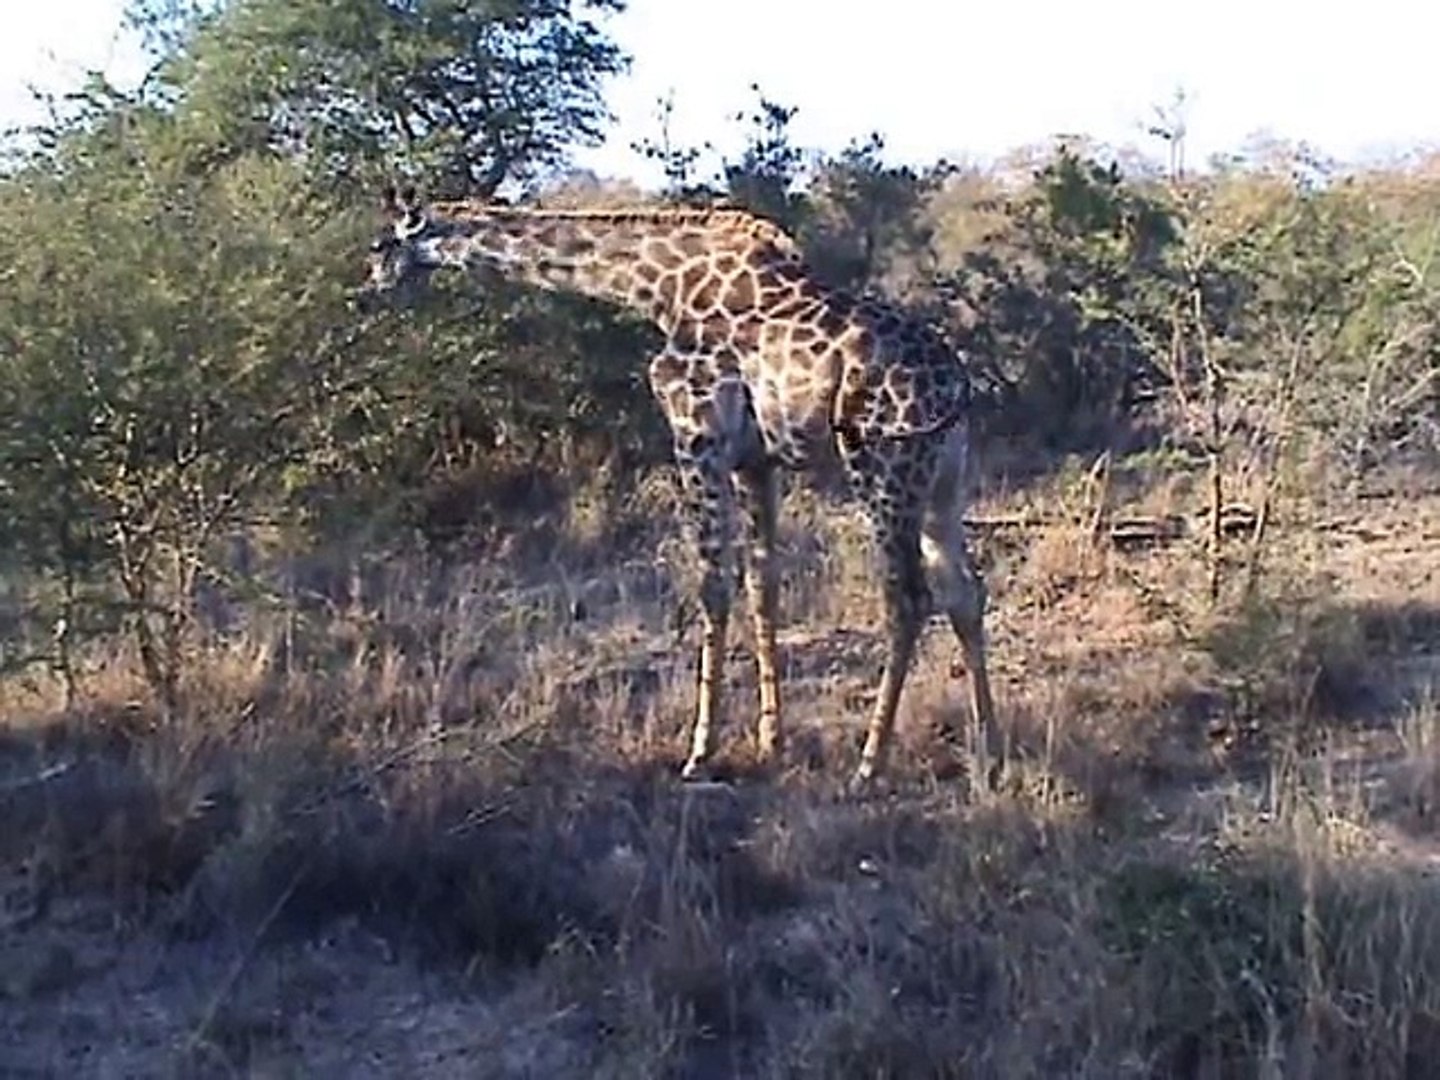 Safari Game Drive 4:  Rhino, Hippo, Giraffe, Lions, Leopard, Kapama Game Reserve, South Africa